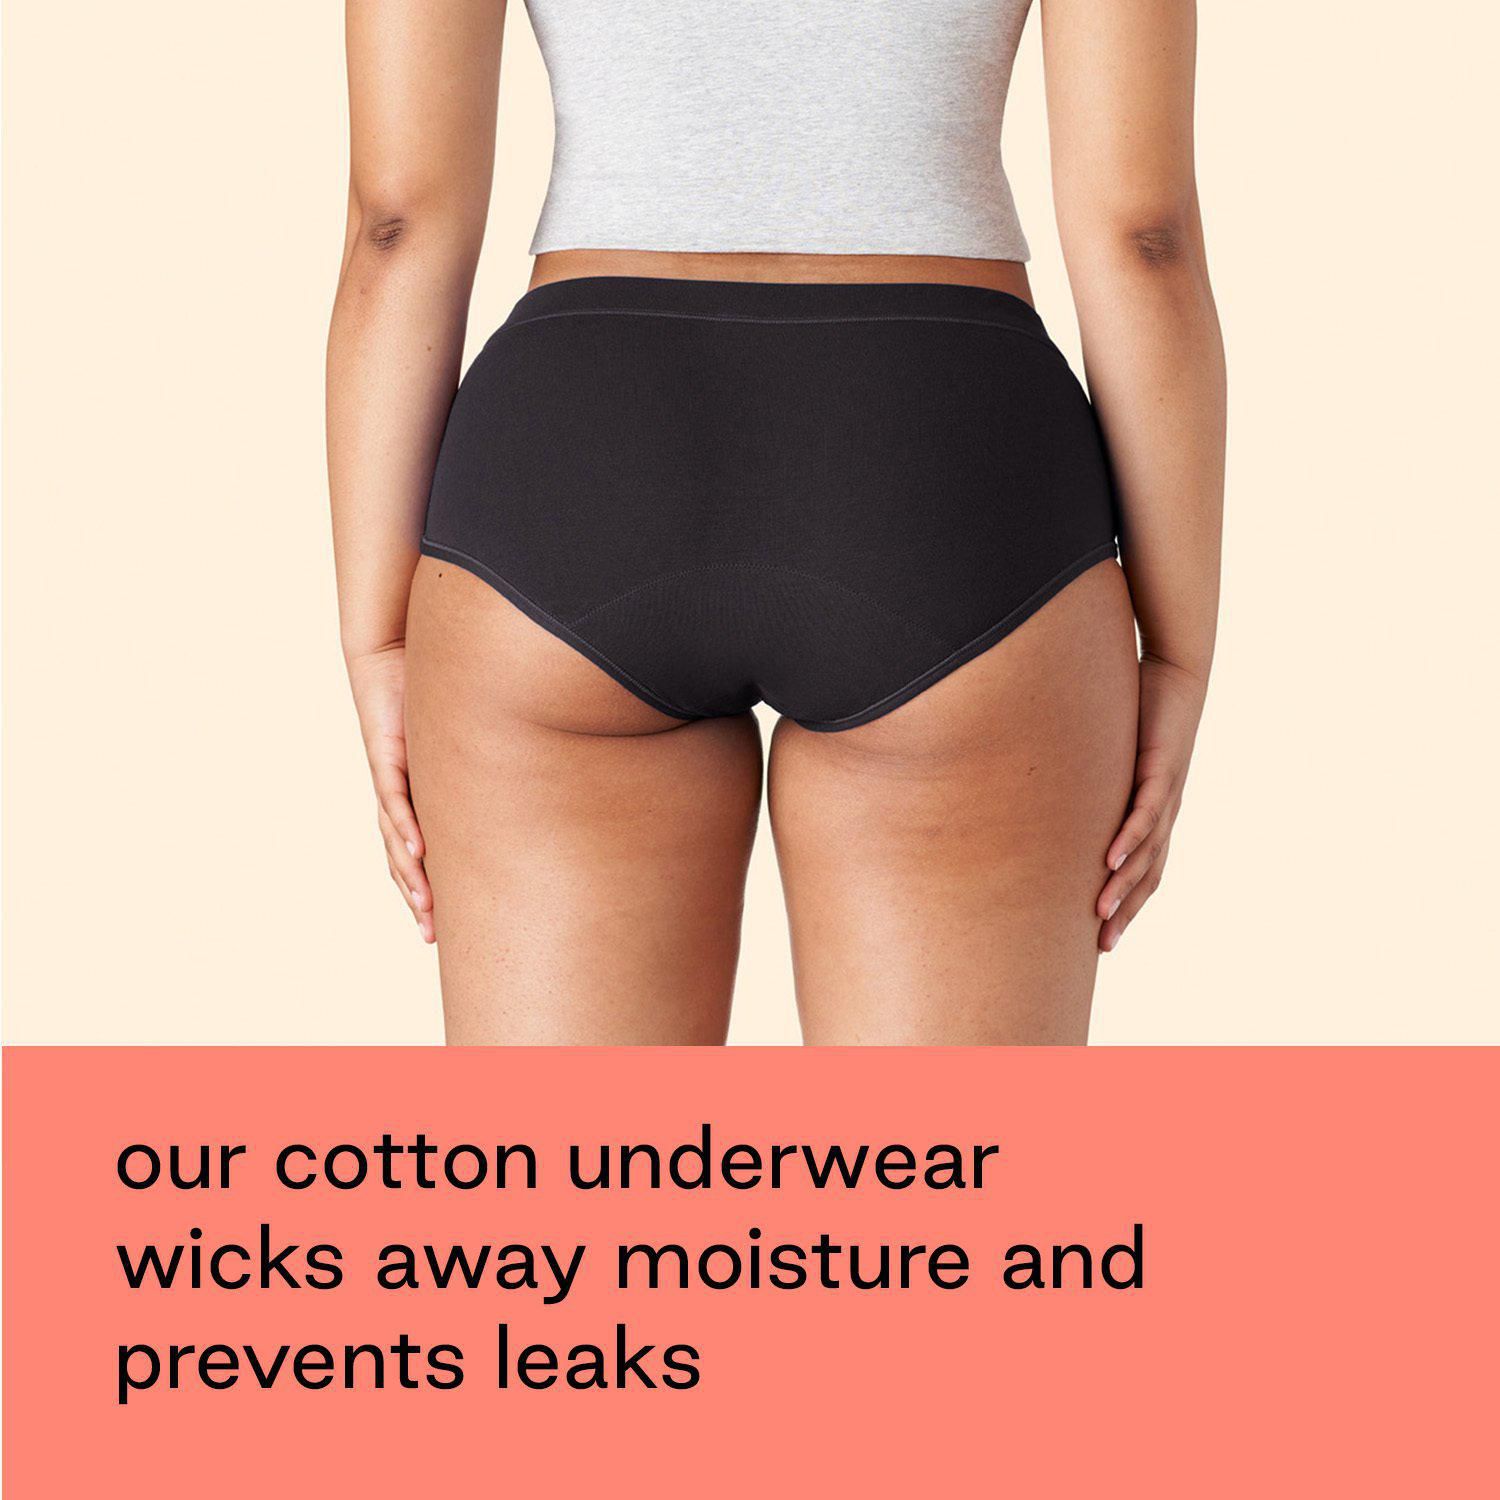 2 Thinx Brief Period Underwear 1X Modal Cotton Heavy Absorbency